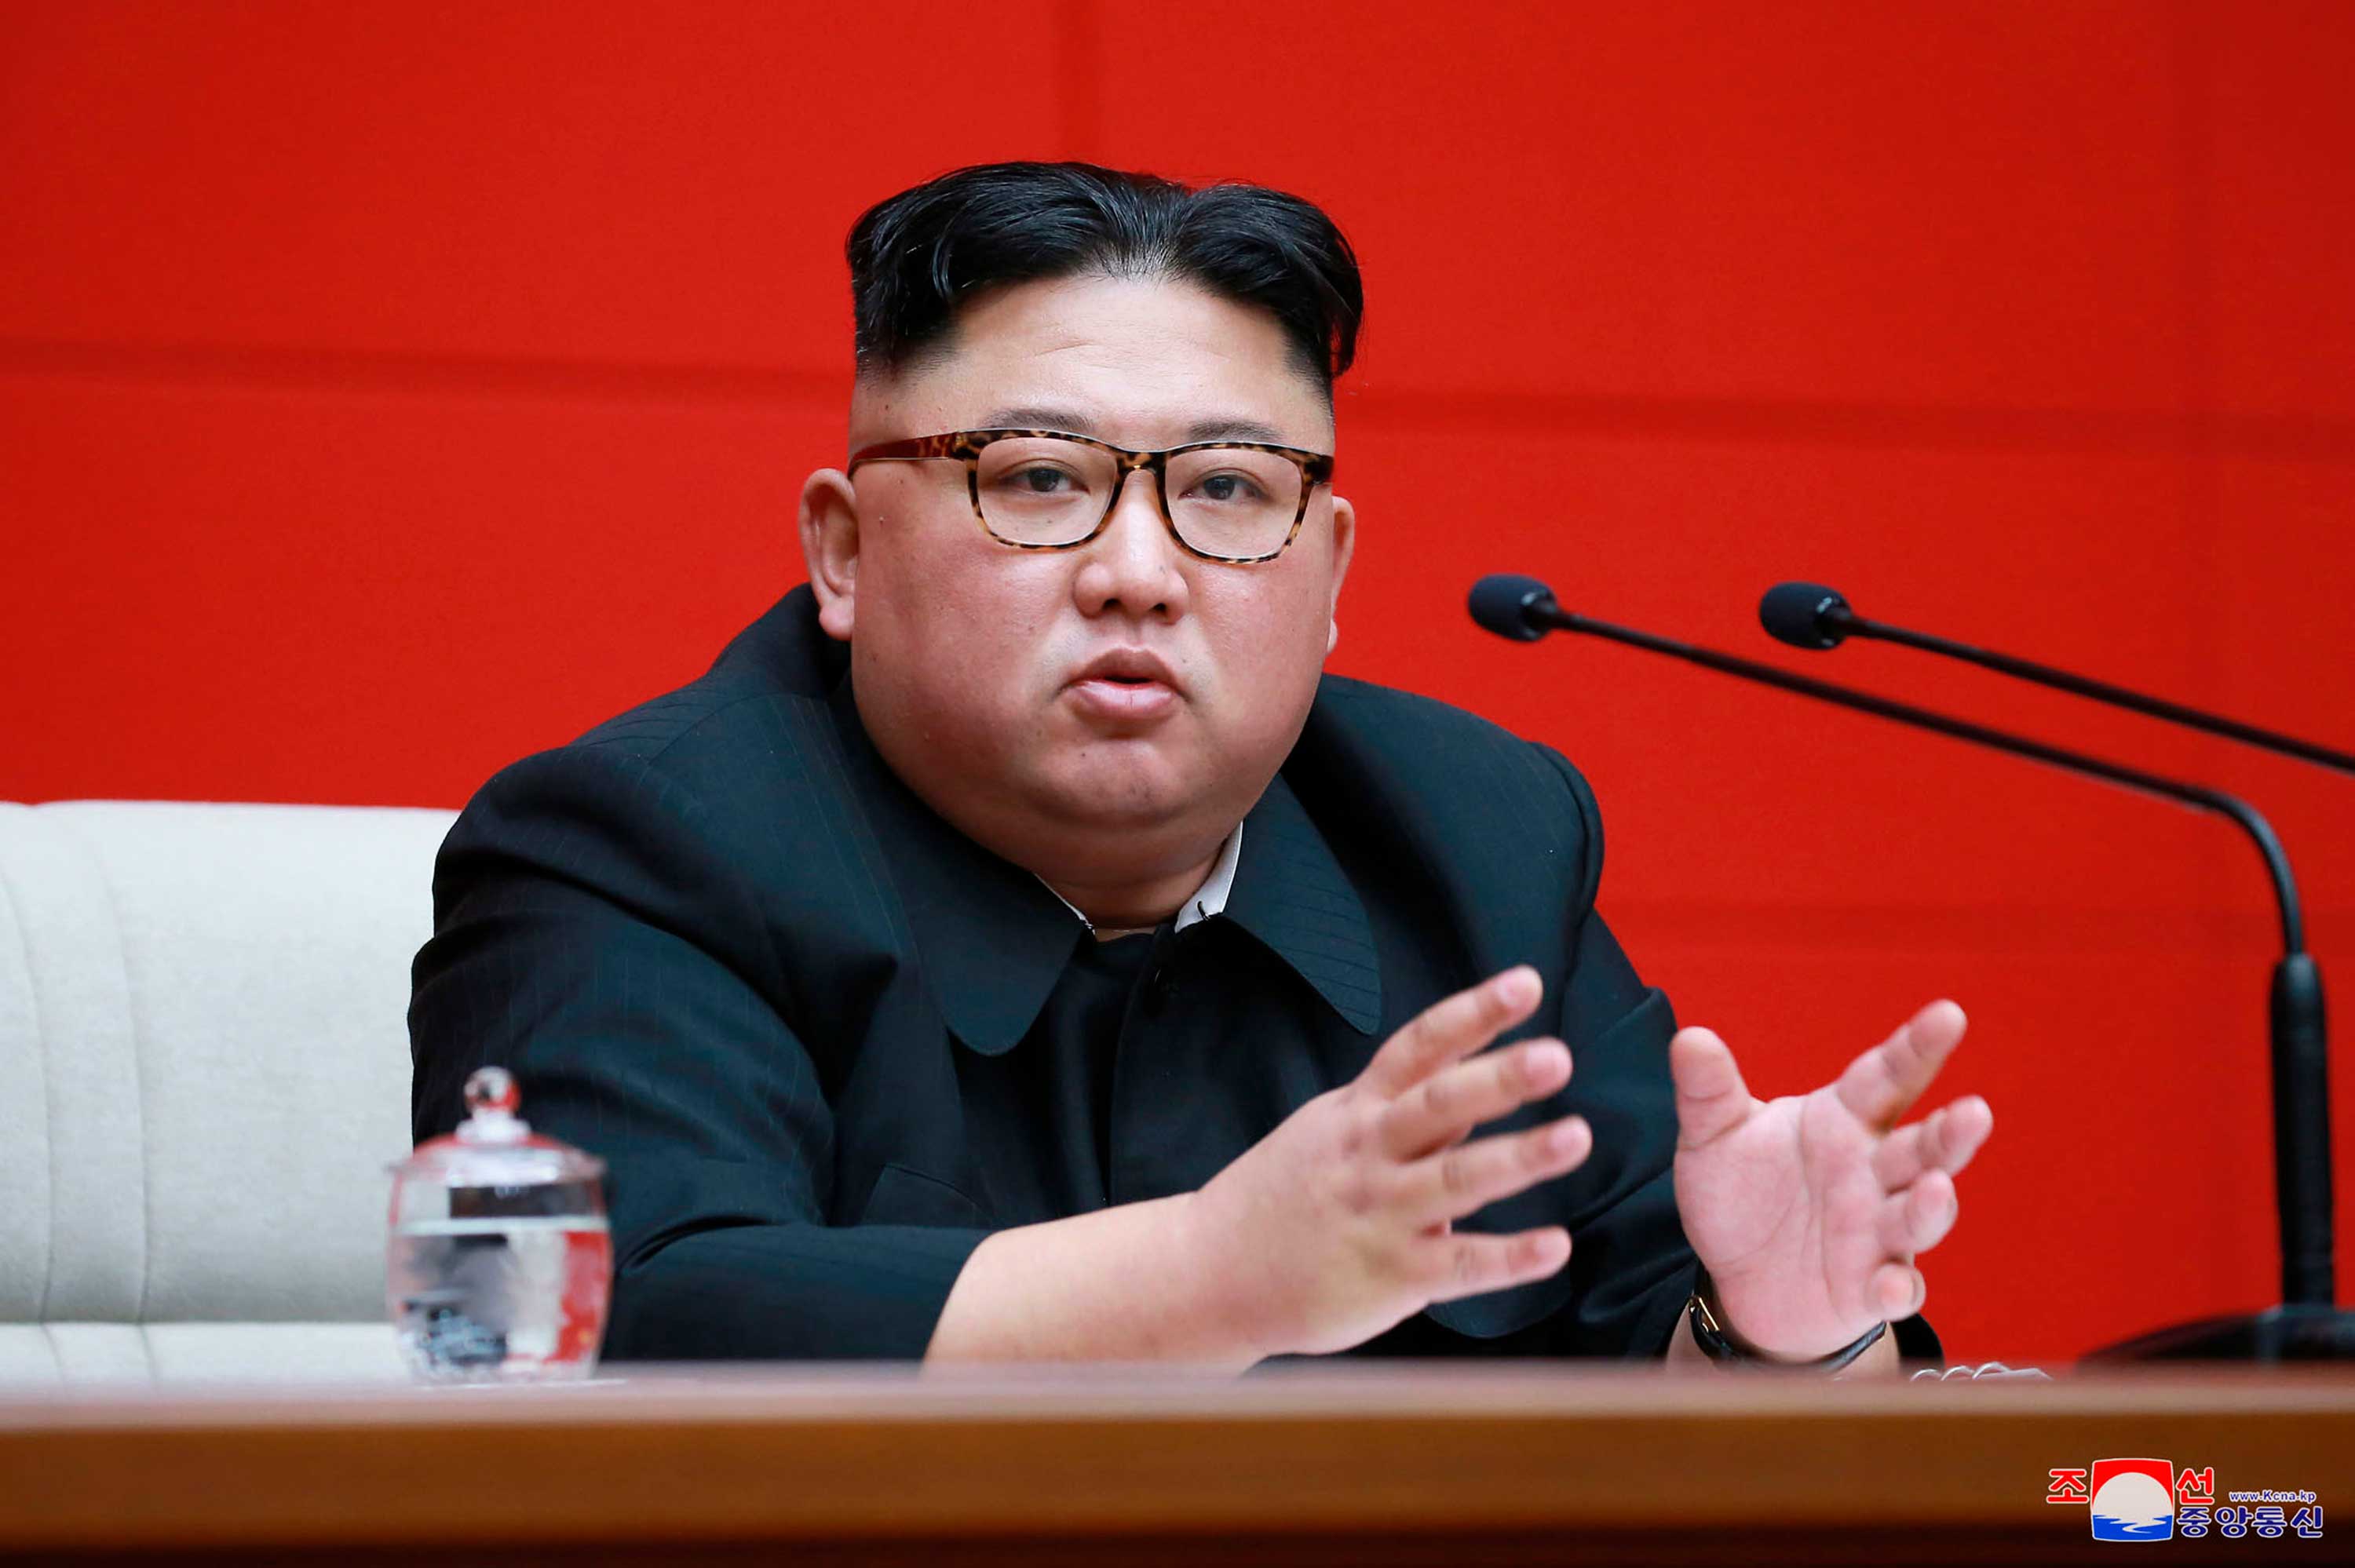 North Korean leader Kim Jong-un speaks into a microphone.